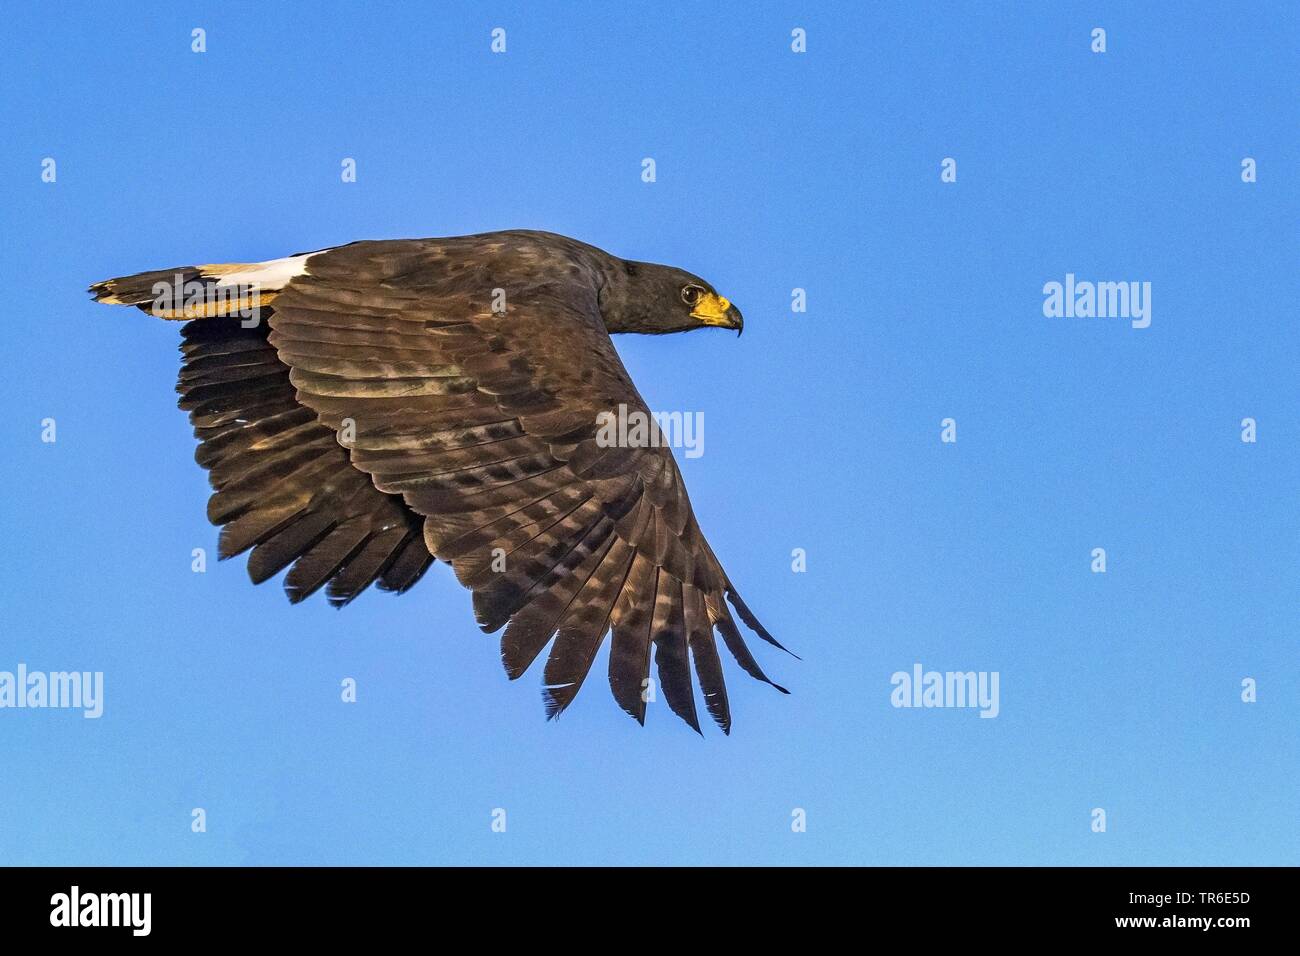 great black hawk (Buteogallus urubitinga), in flight in the blue sky, side view, Brazil, Pantanal, Pantanal Matogrossense National Park Stock Photo